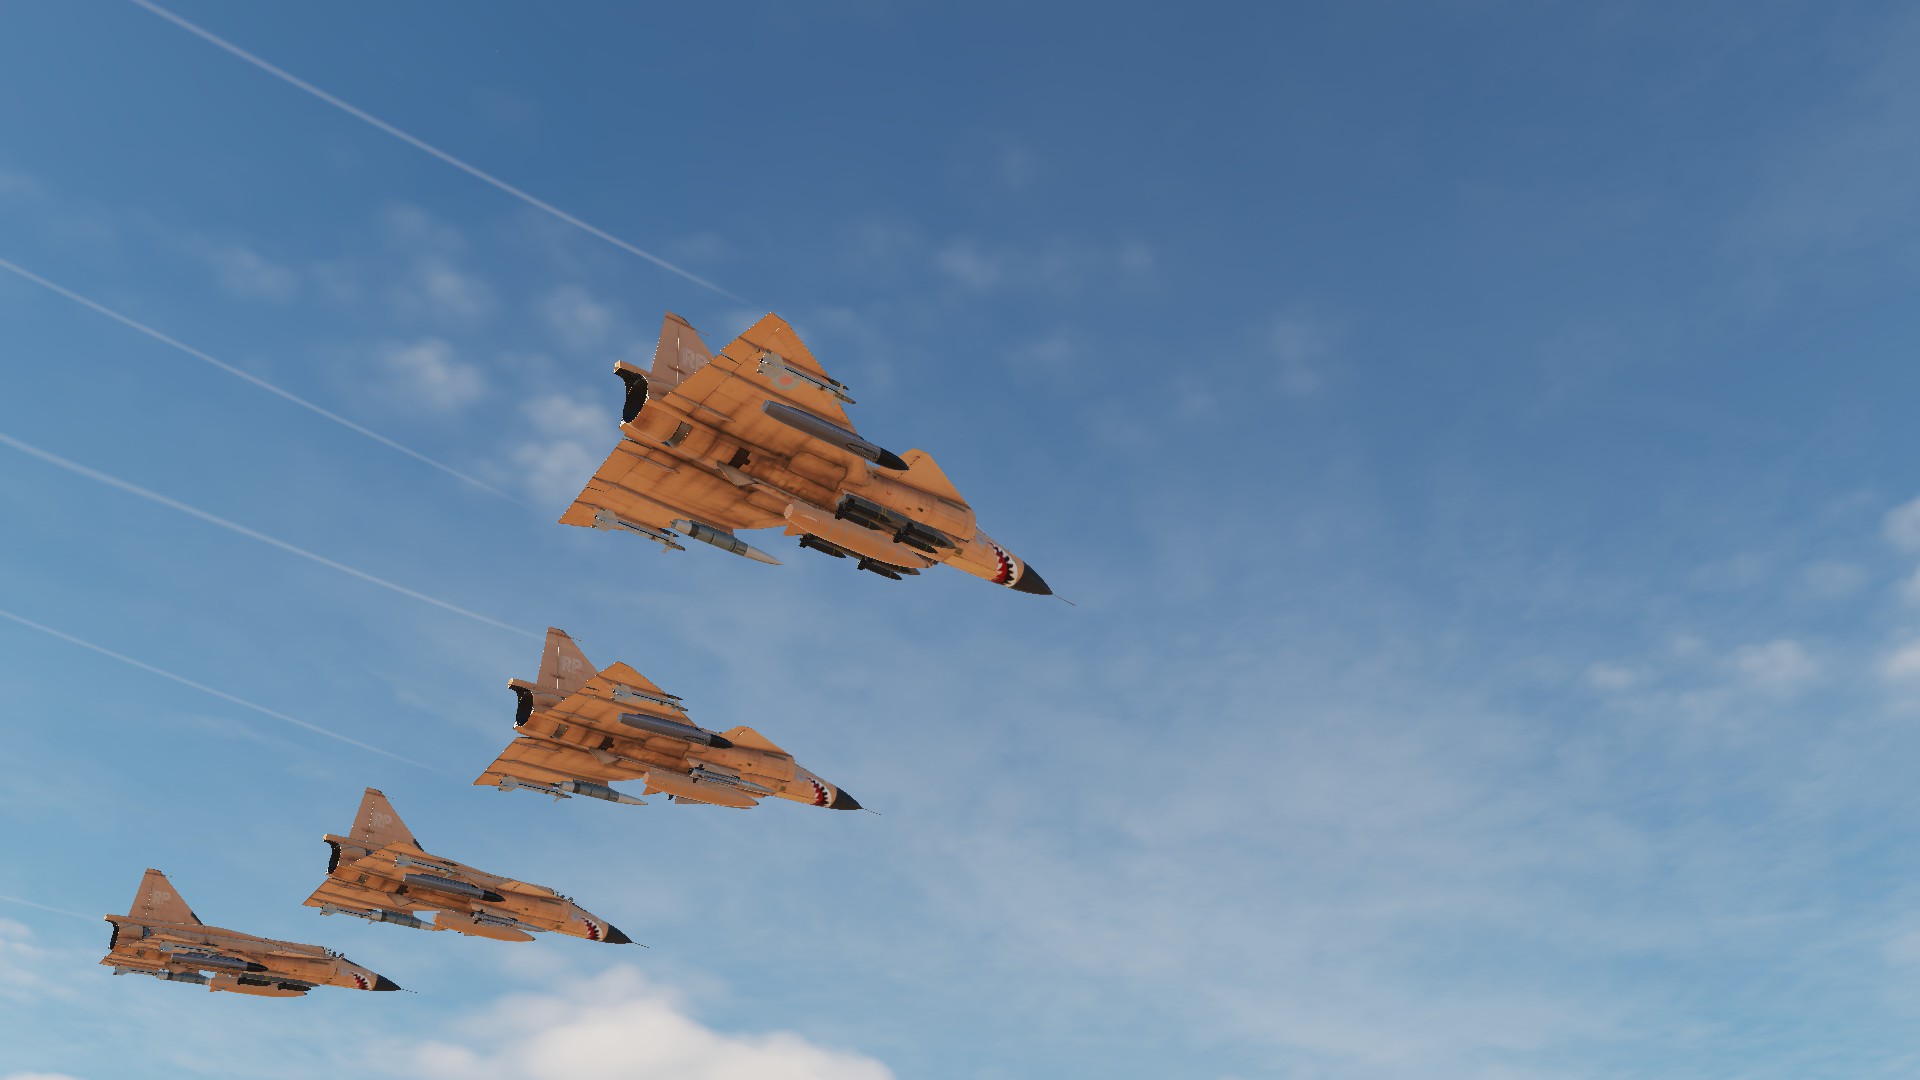 RAF "Tornado" 37 Desert Pink 'Royal Purpose' [Fictional, duh.] - 20230310